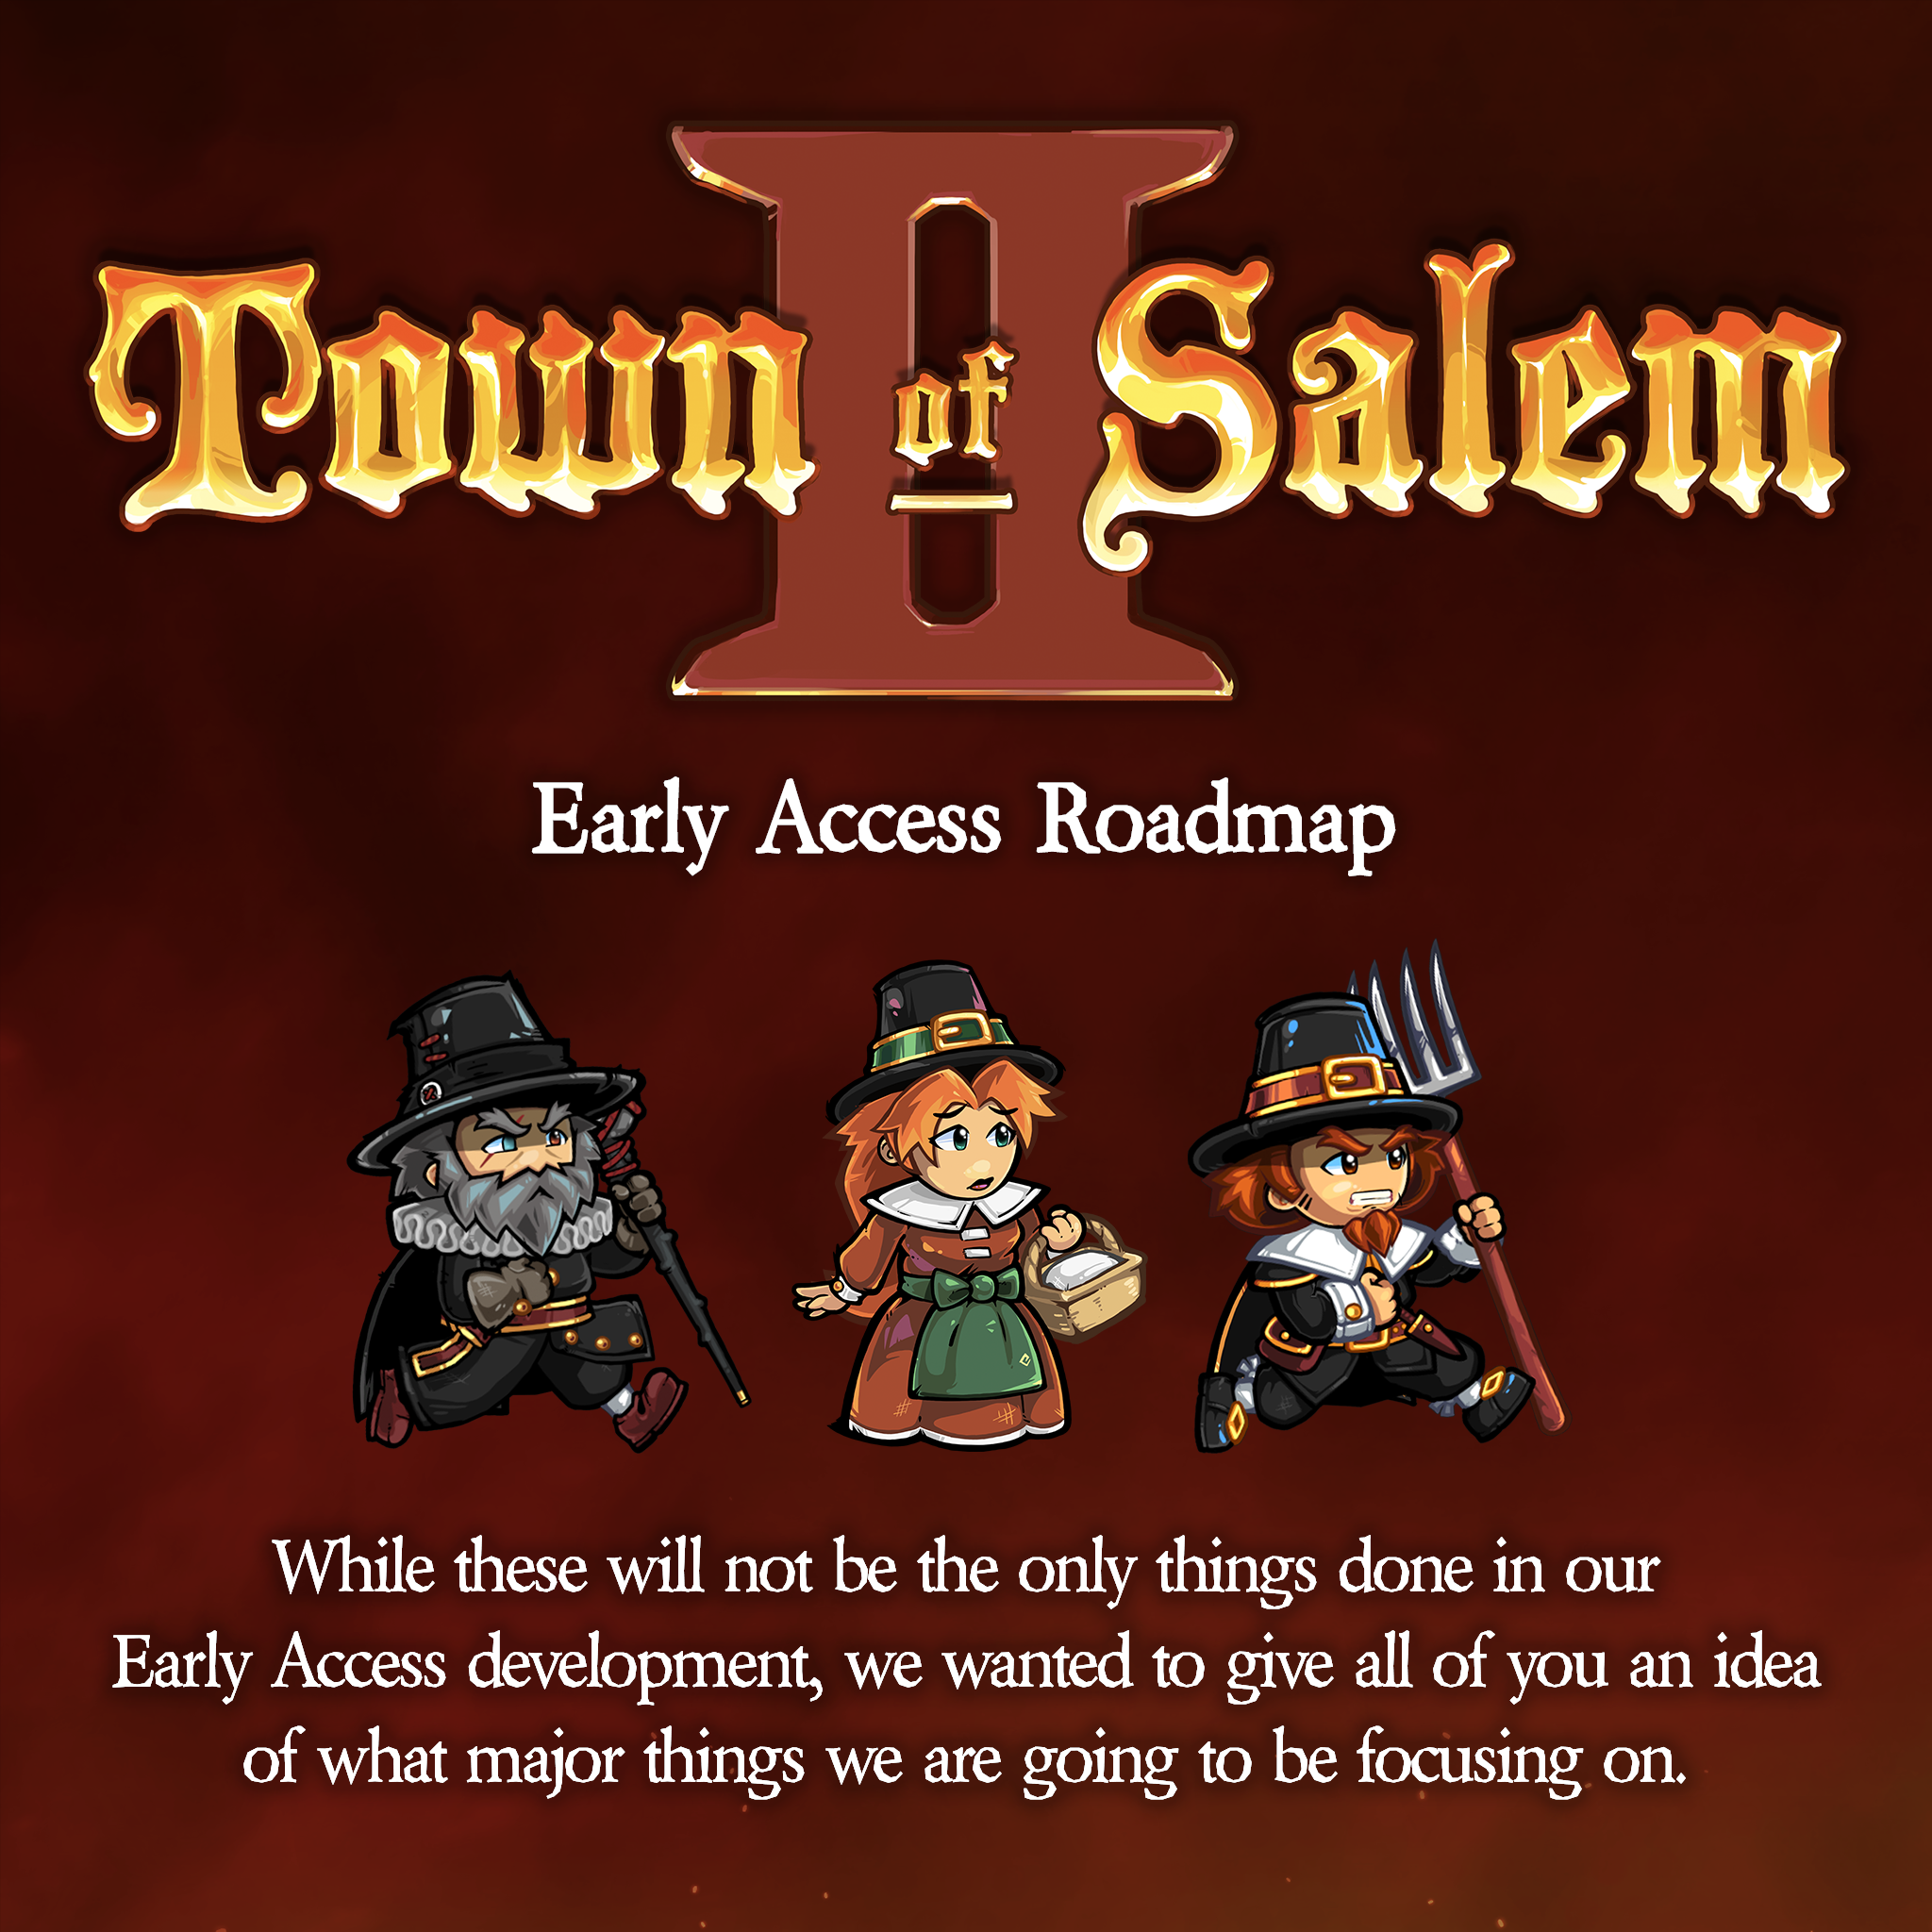 Town of Salem 2